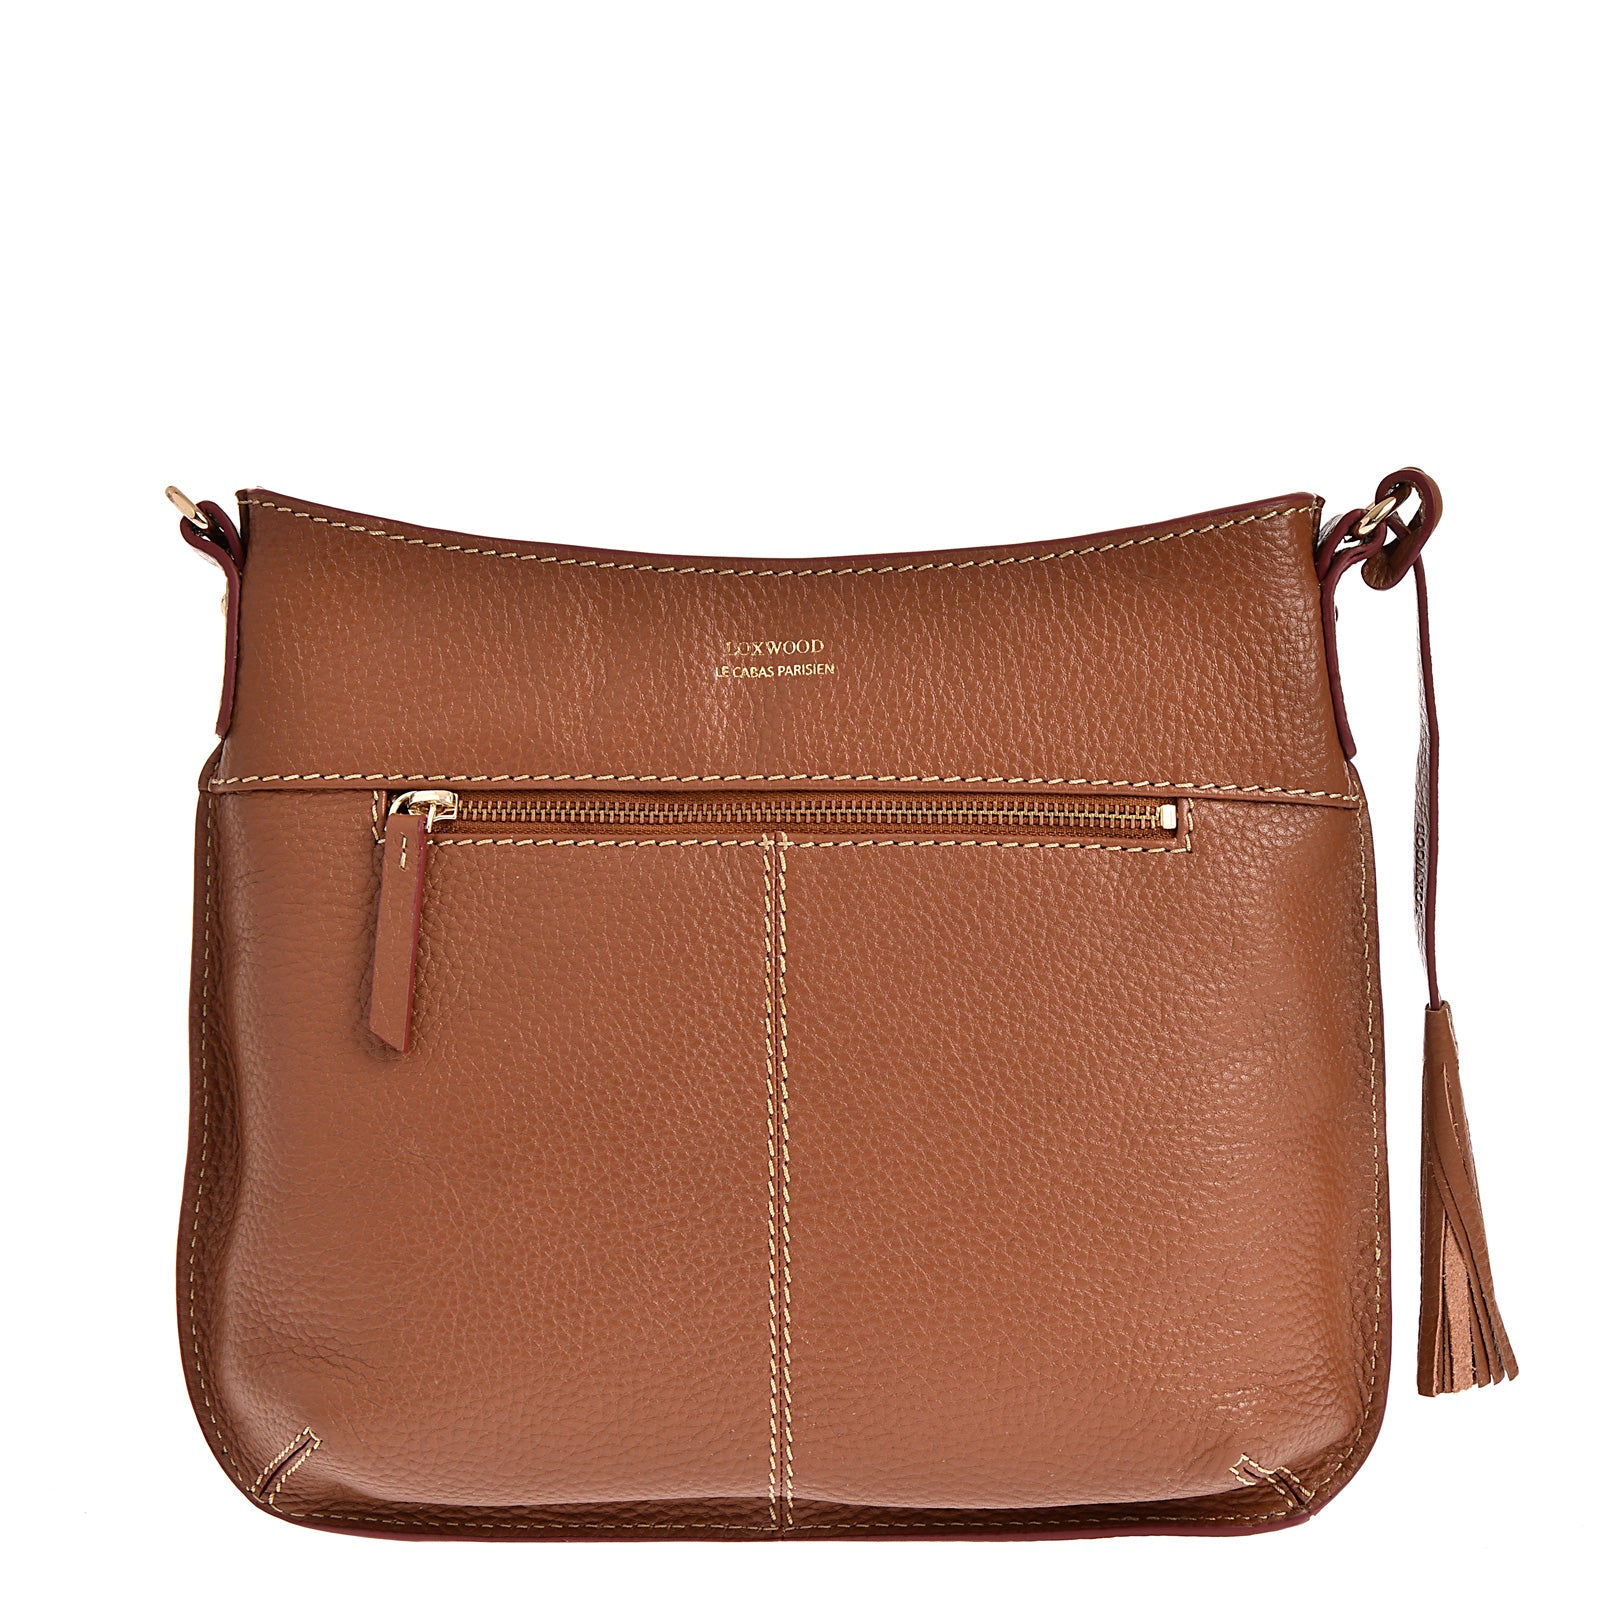 CELIA L - Grained leather messenger bag